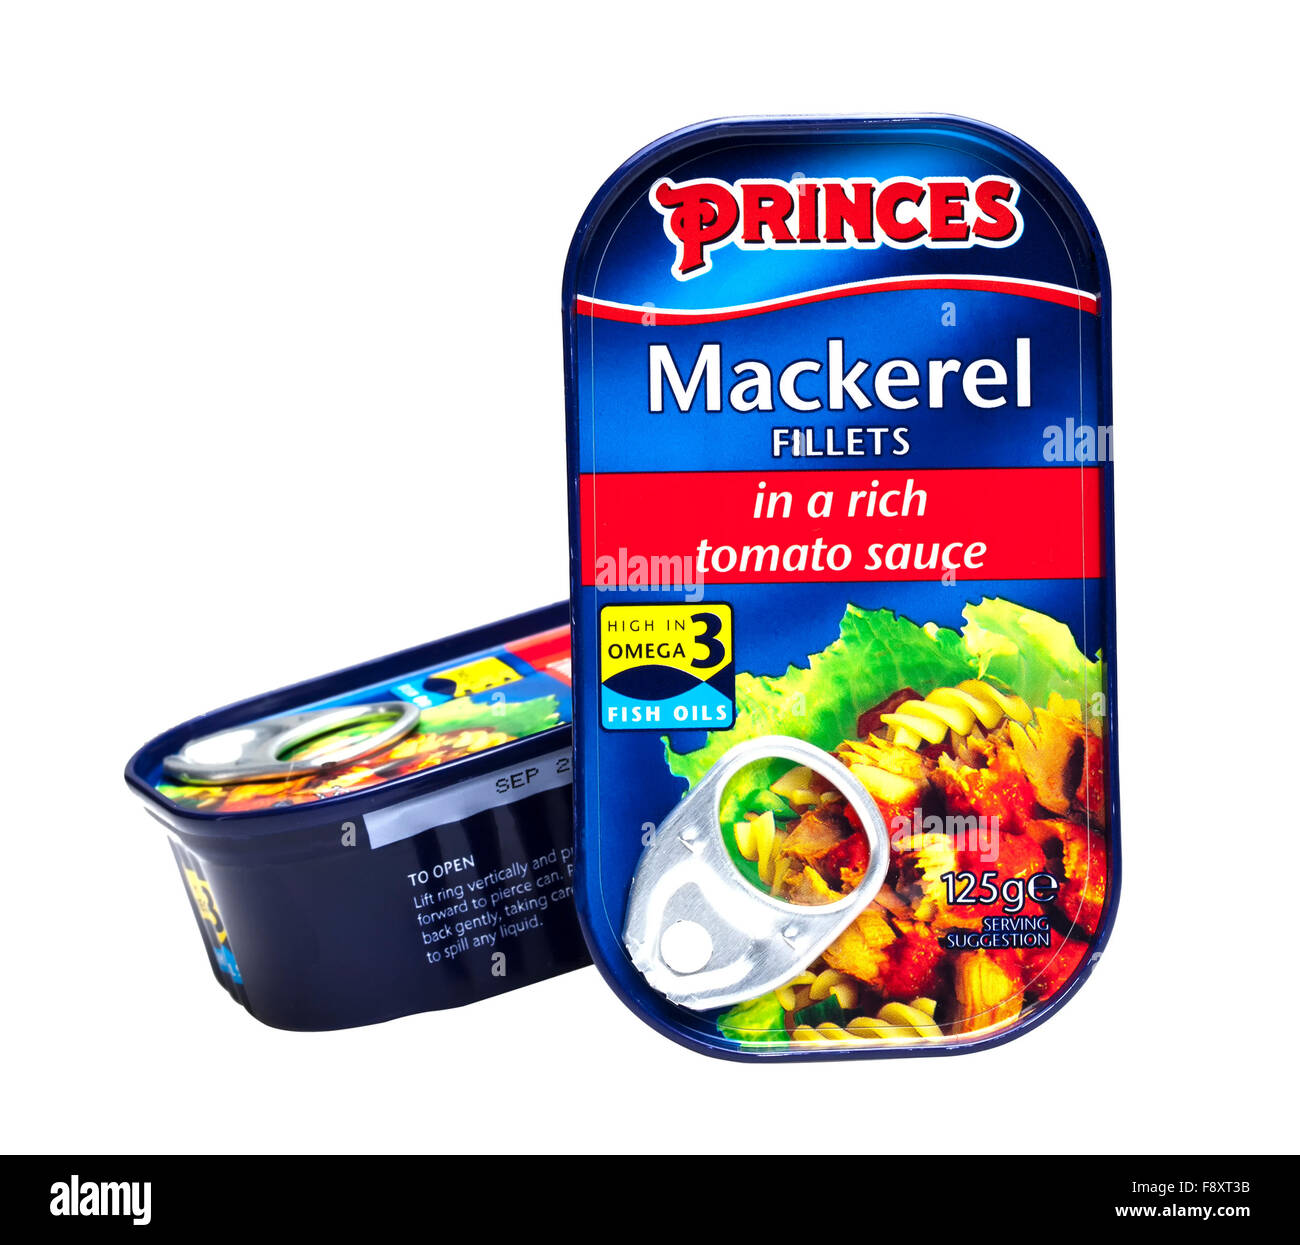 Tin of Princes Mackerel fillets in a rich Tomato Sauce on a white background Stock Photo